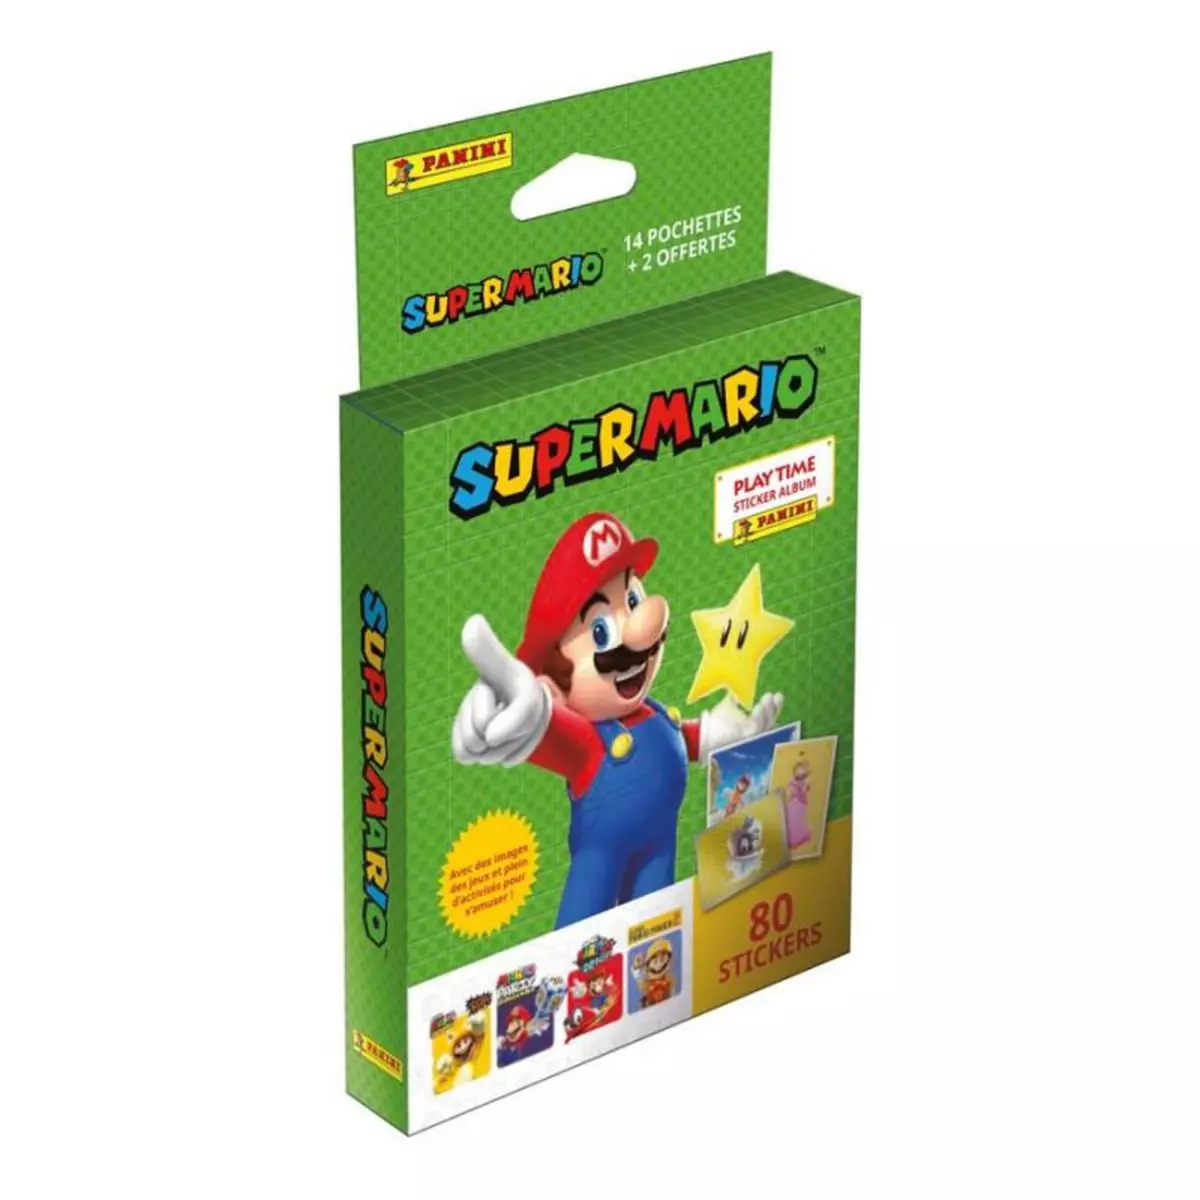 Panini Carte à collectionner Panini Super Mario Blister avec 13 pochettes et 1 offerte